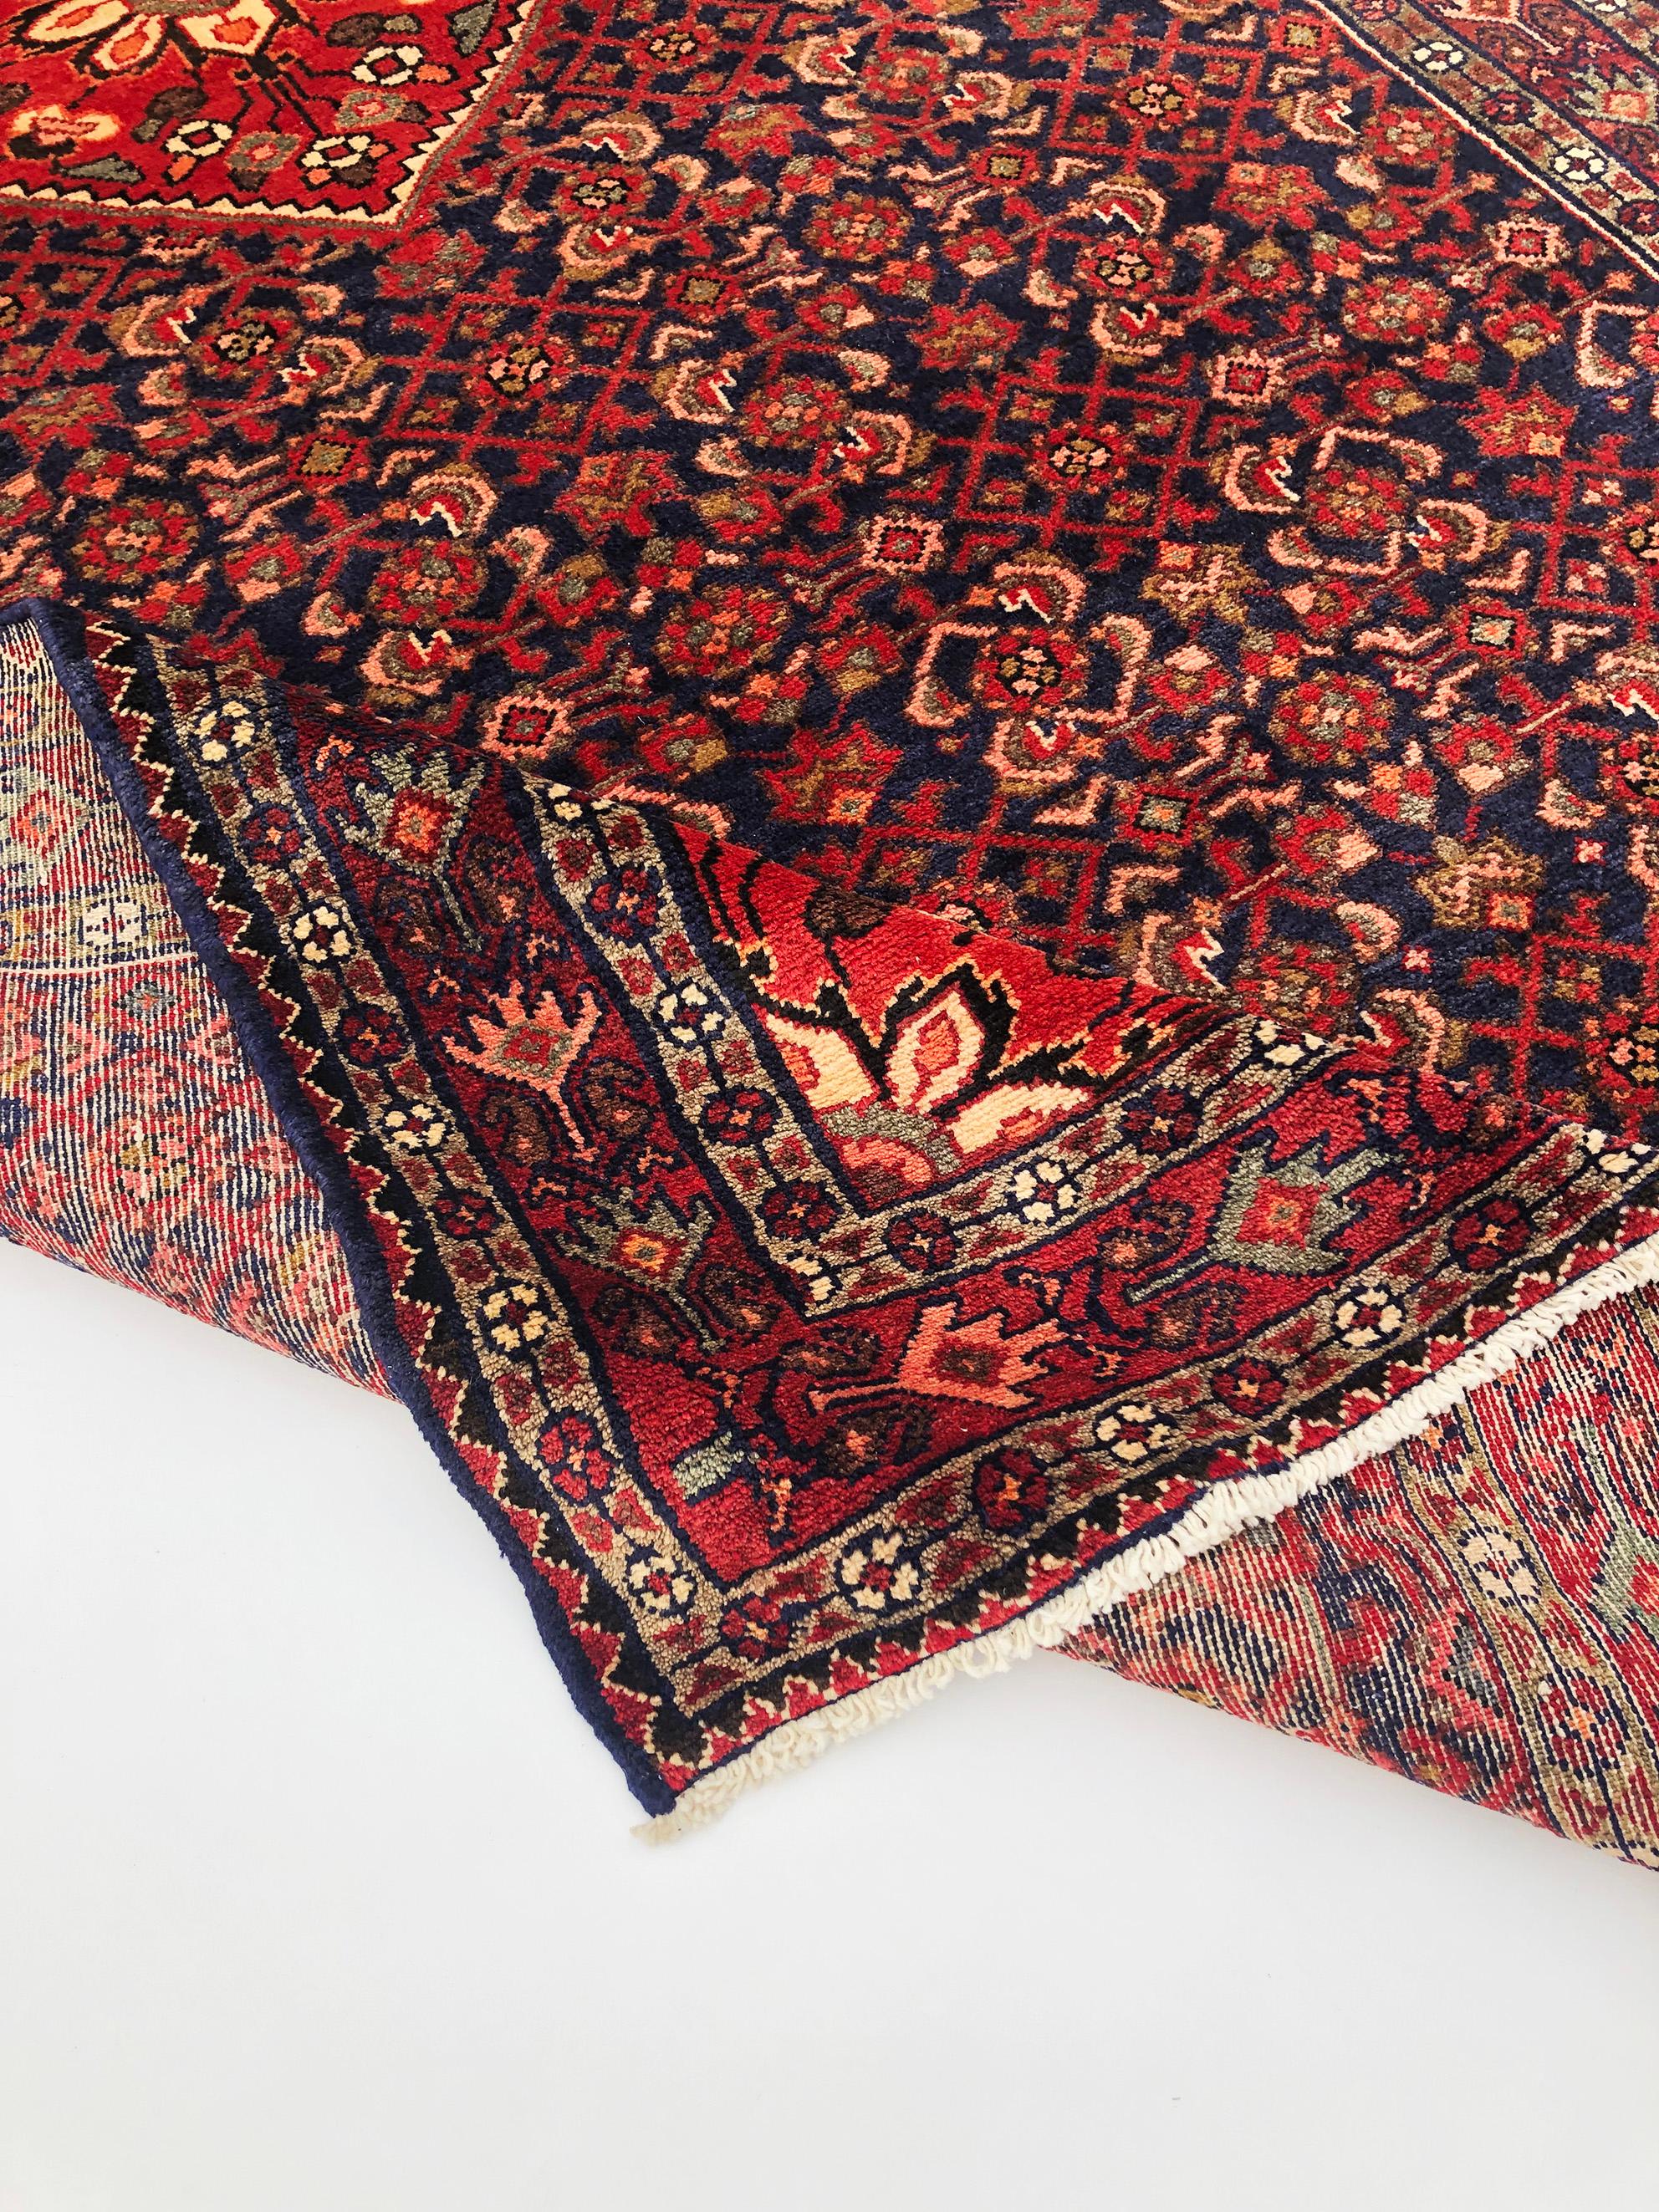 Vintage Handmade Persian Floor Rug Hosseinabad Red Blue Medallion Wool 1990s For Sale 2